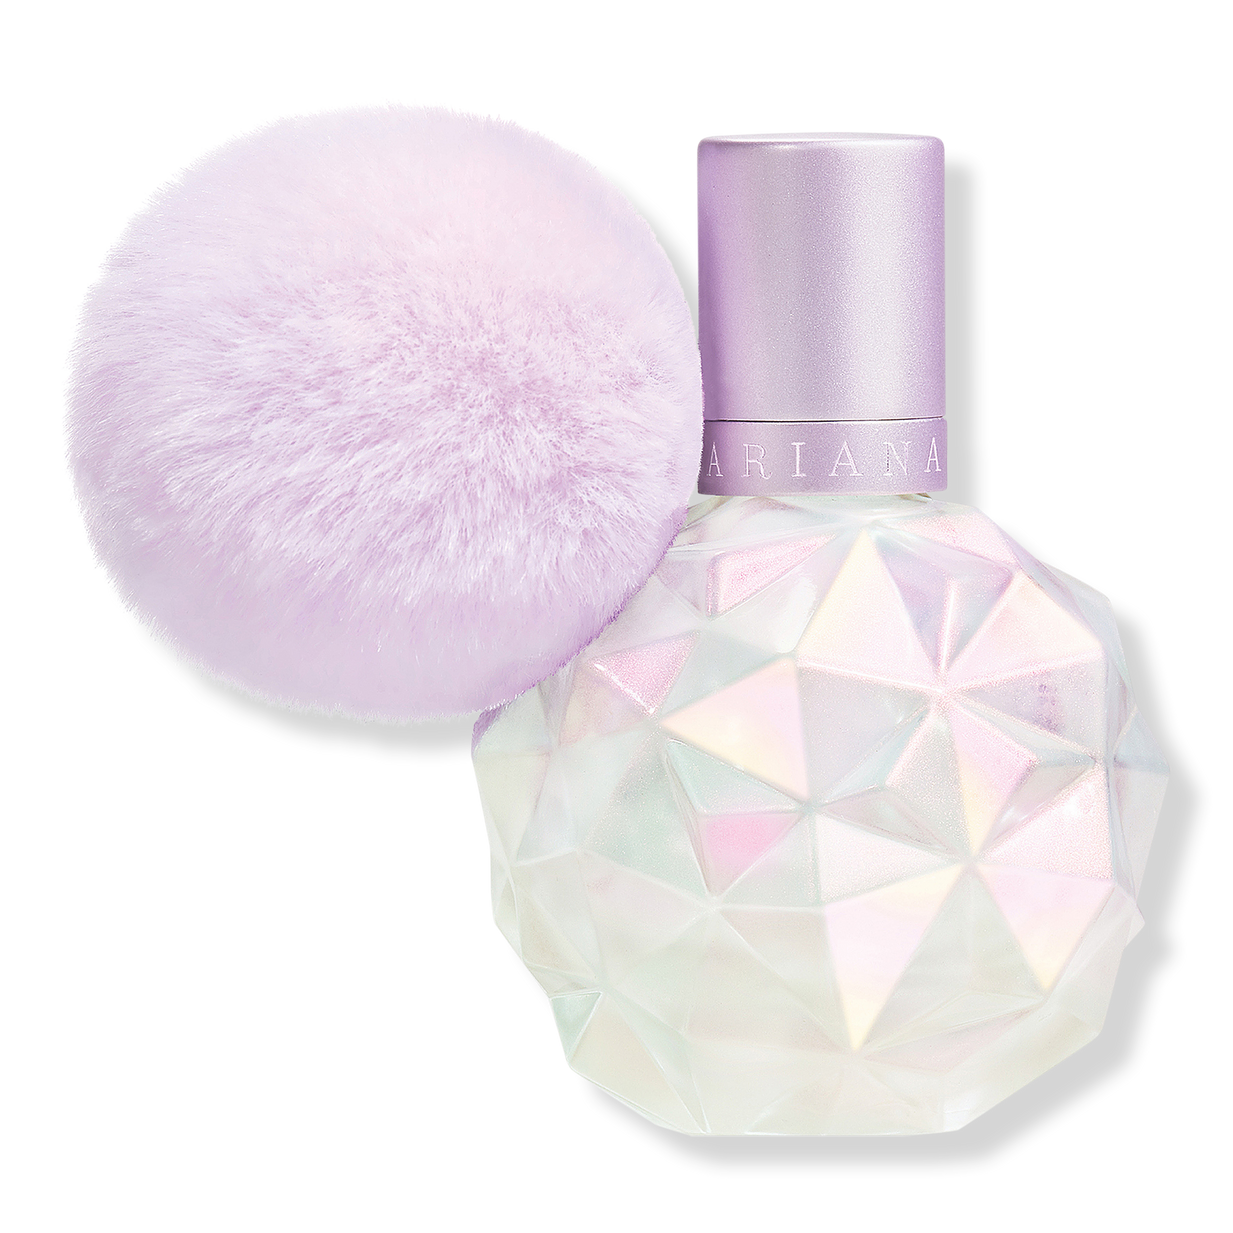 Ariana Grande Moonlight Women's 3.4-ounce Eau de Parfum Spray, White Vanilla